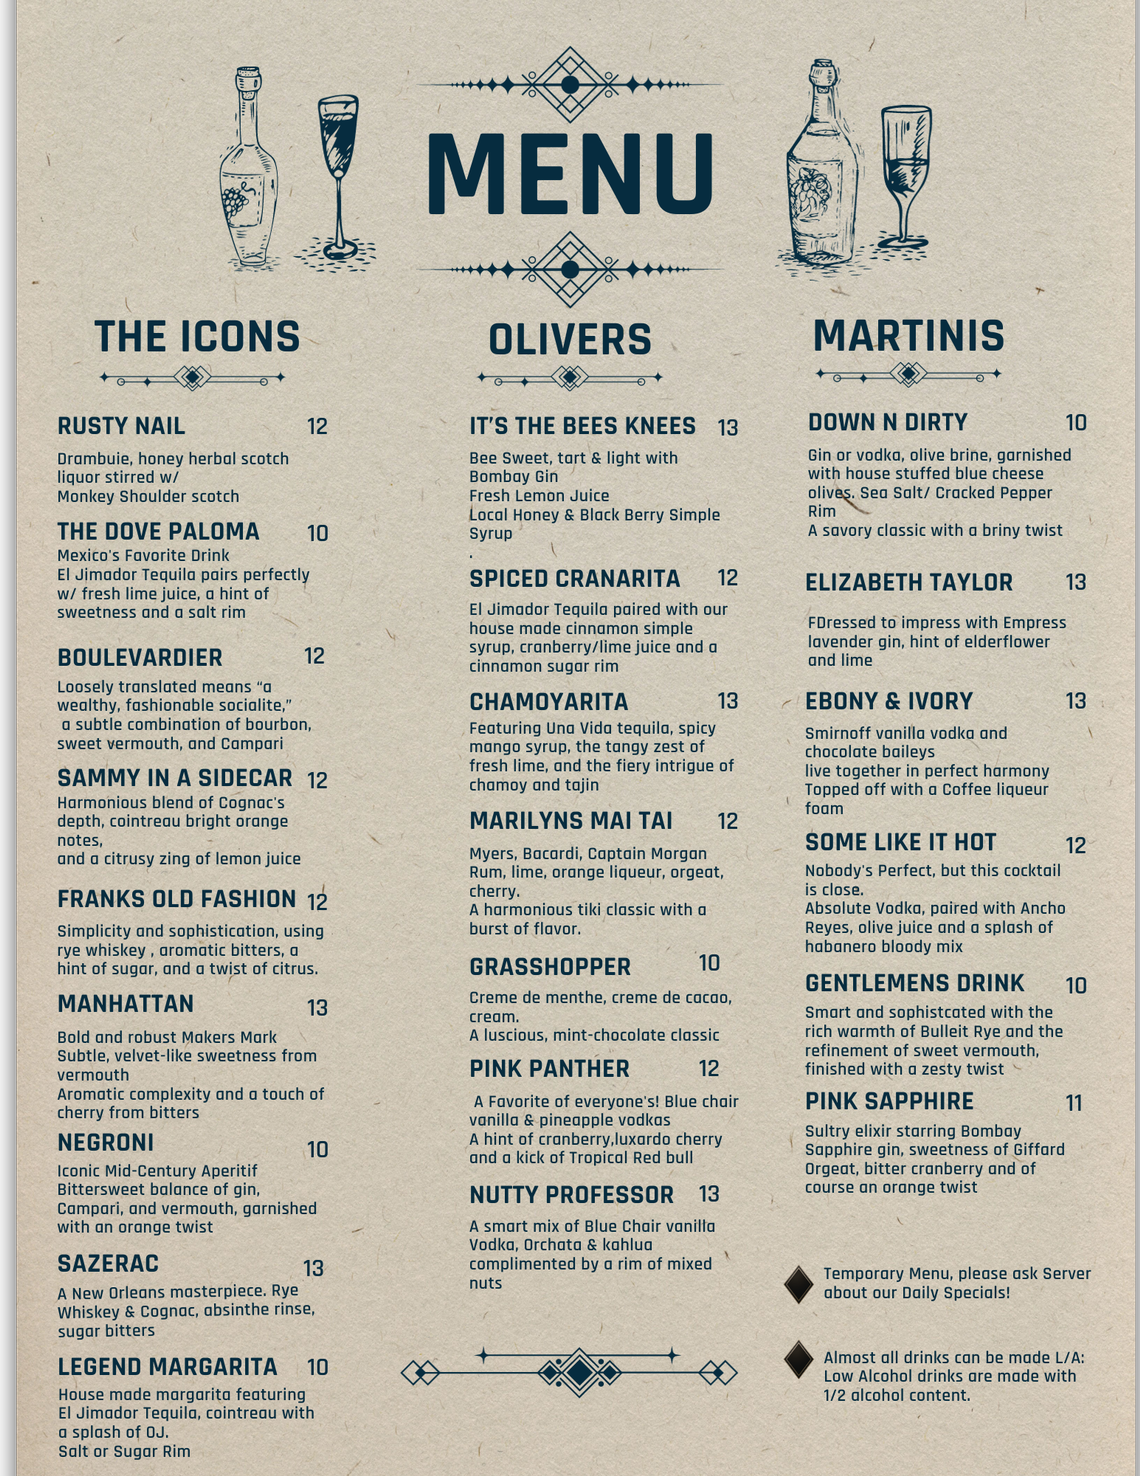 The drink menu at Oliver’s Lounge